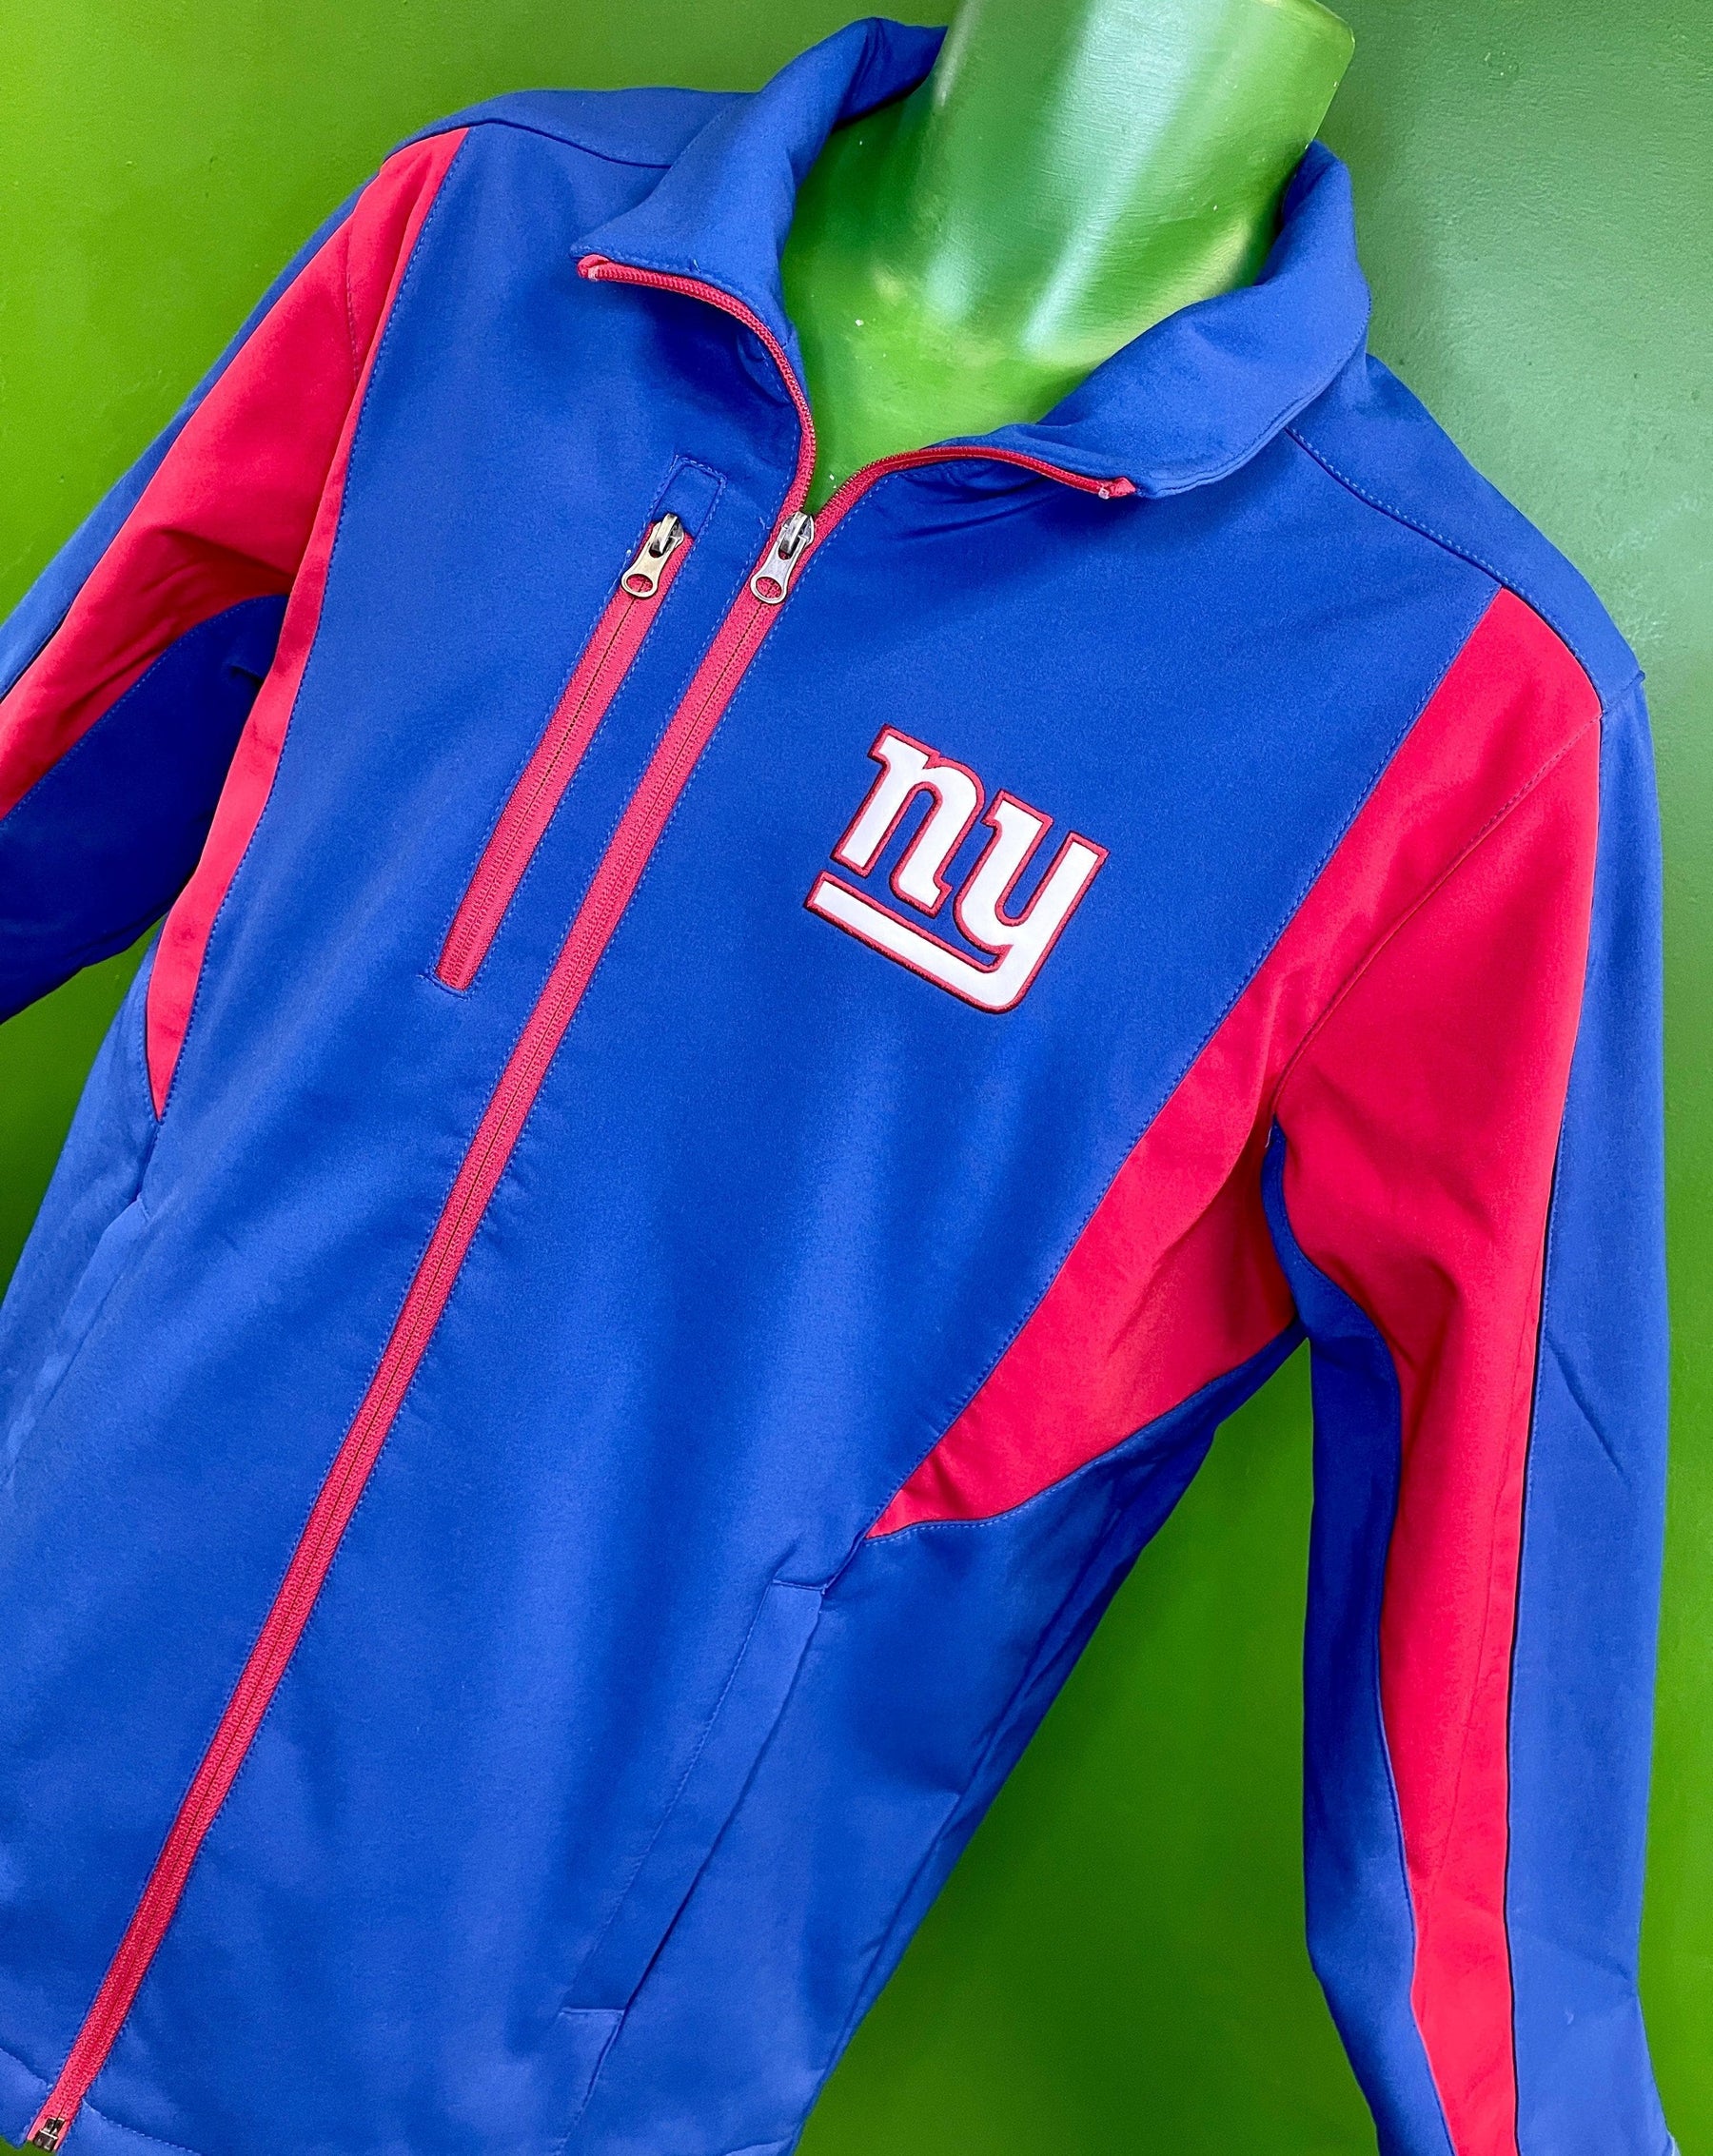 NFL New York Giants Beautiful Midweight Jacket/Coat Men's Medium